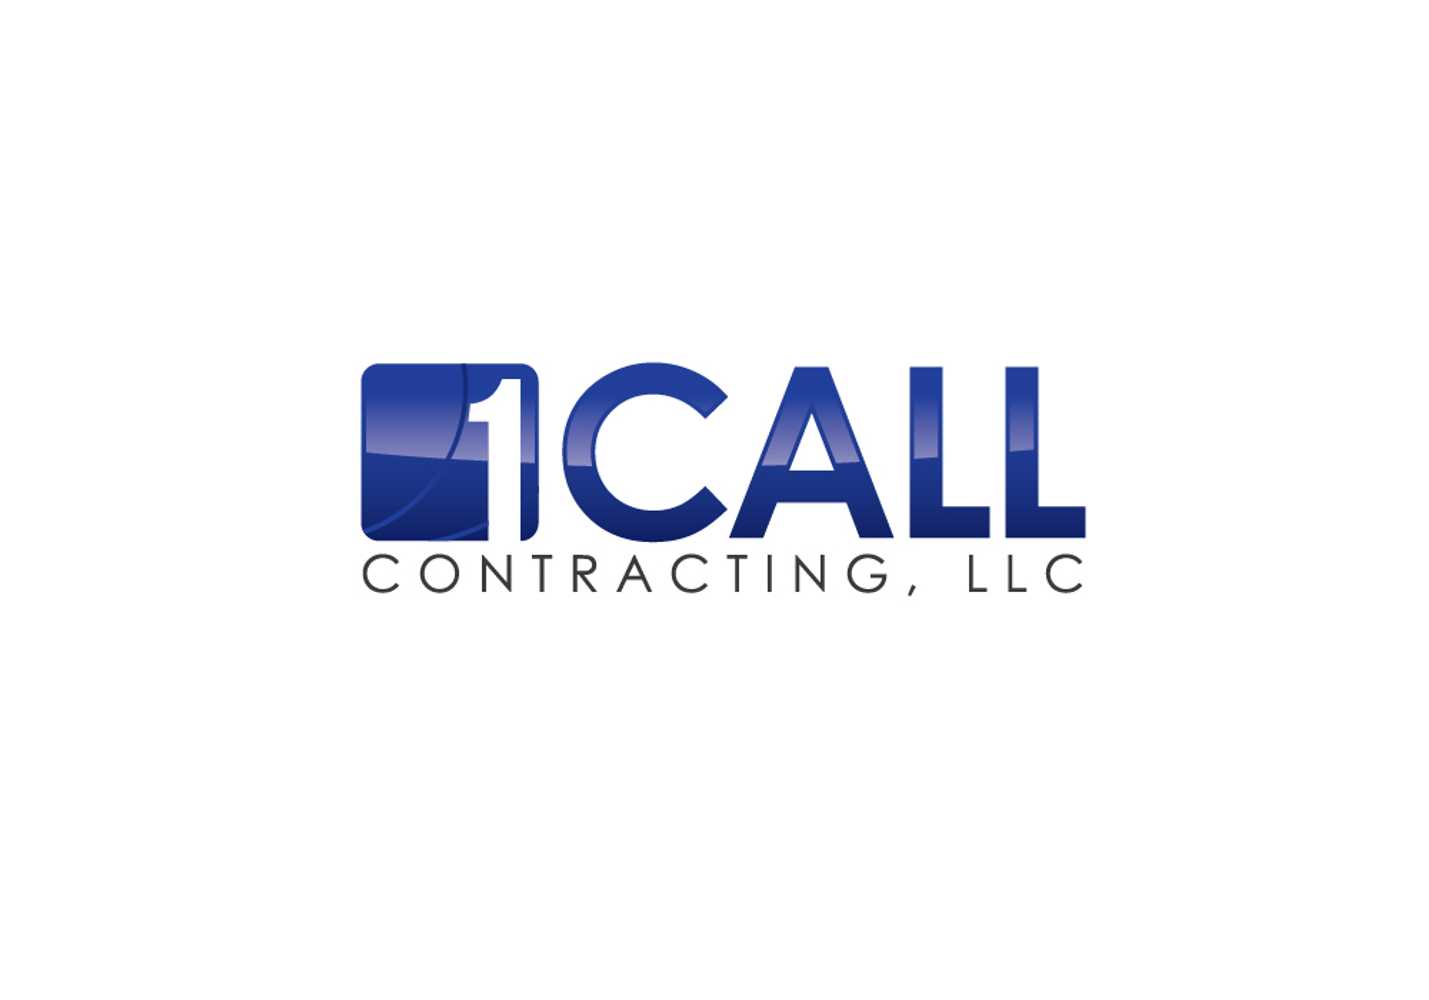 1 Call Contracting, LLC 